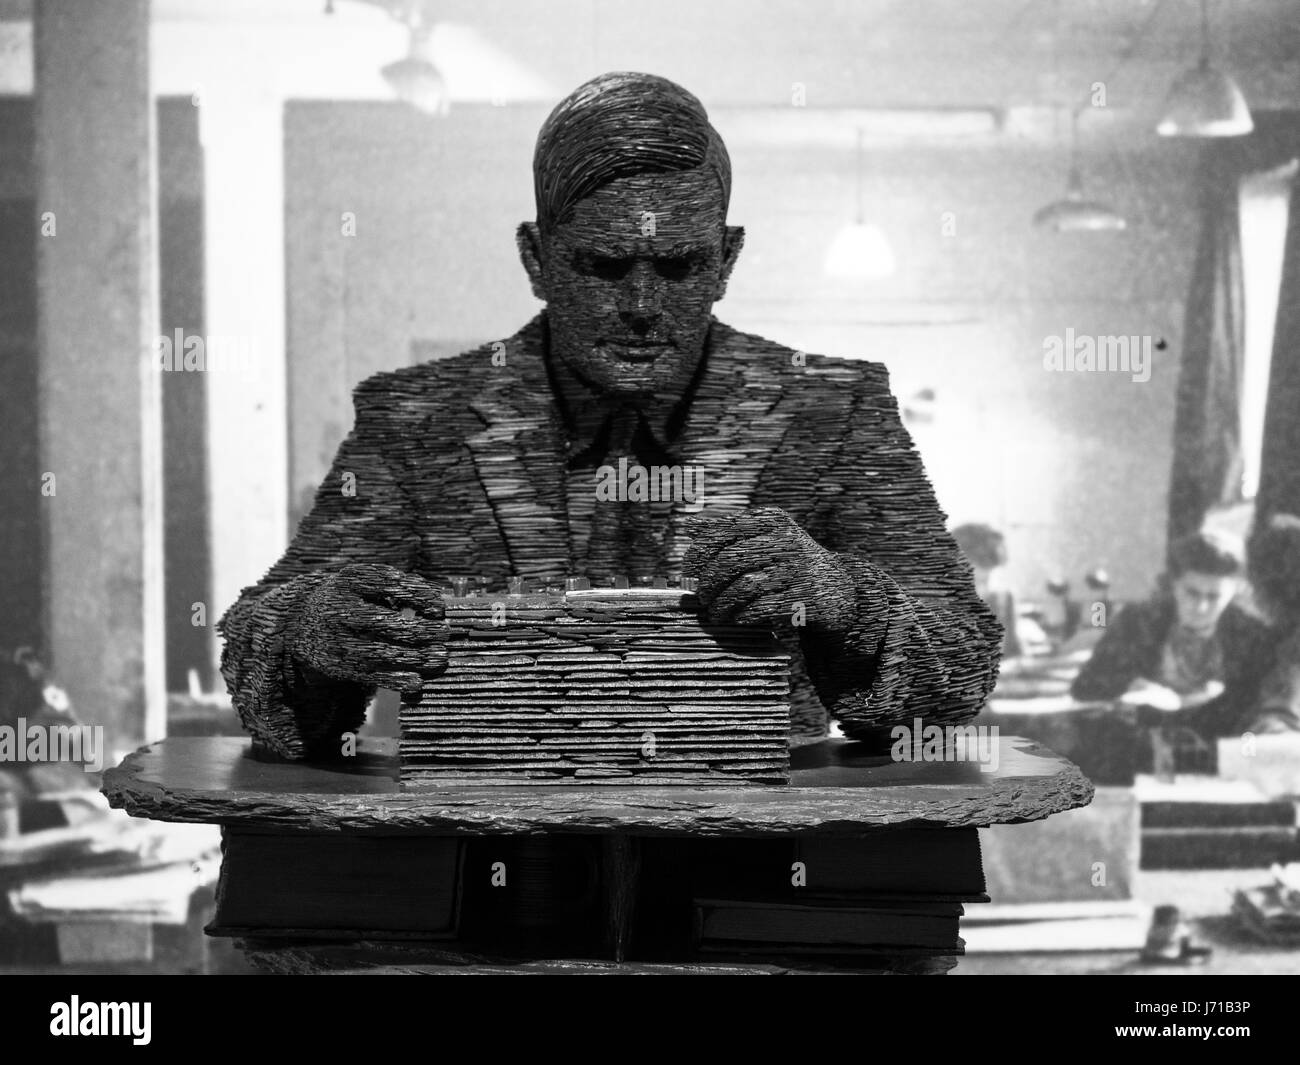 Schiefer Skulptur von Codebreaker Alan Turing Künstlers Stephen Kettle gestapelt. Das Denkmal steht in Bletchley Park - Heimat der Dresdenener Codebreakers. Stockfoto